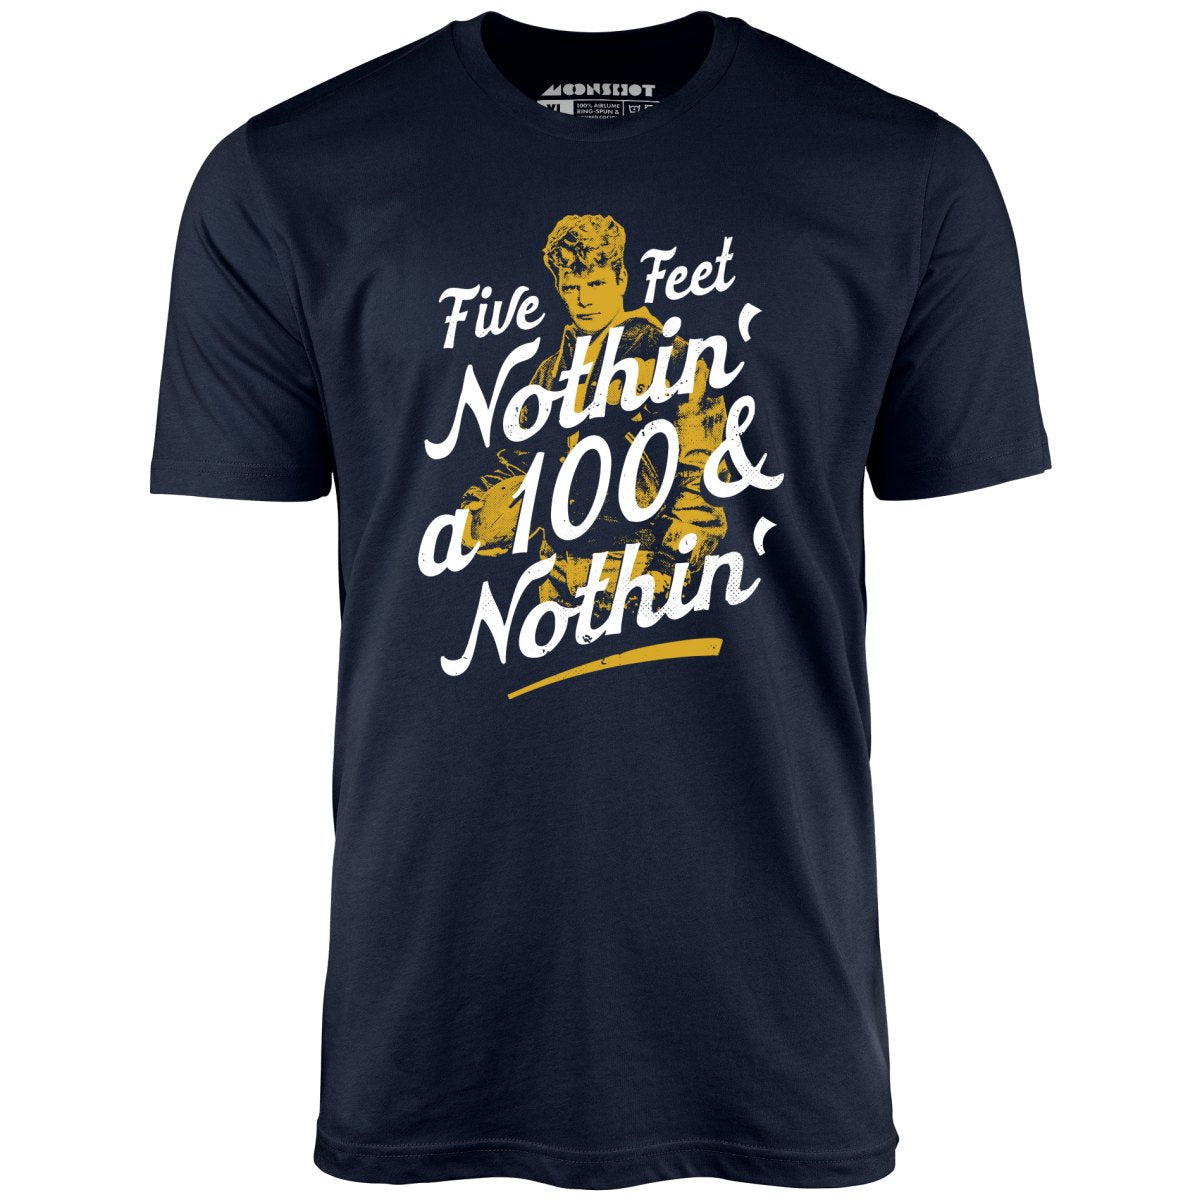 Rudy - Five Feet Nothin' a 100 & Nothin' - Unisex T-Shirt